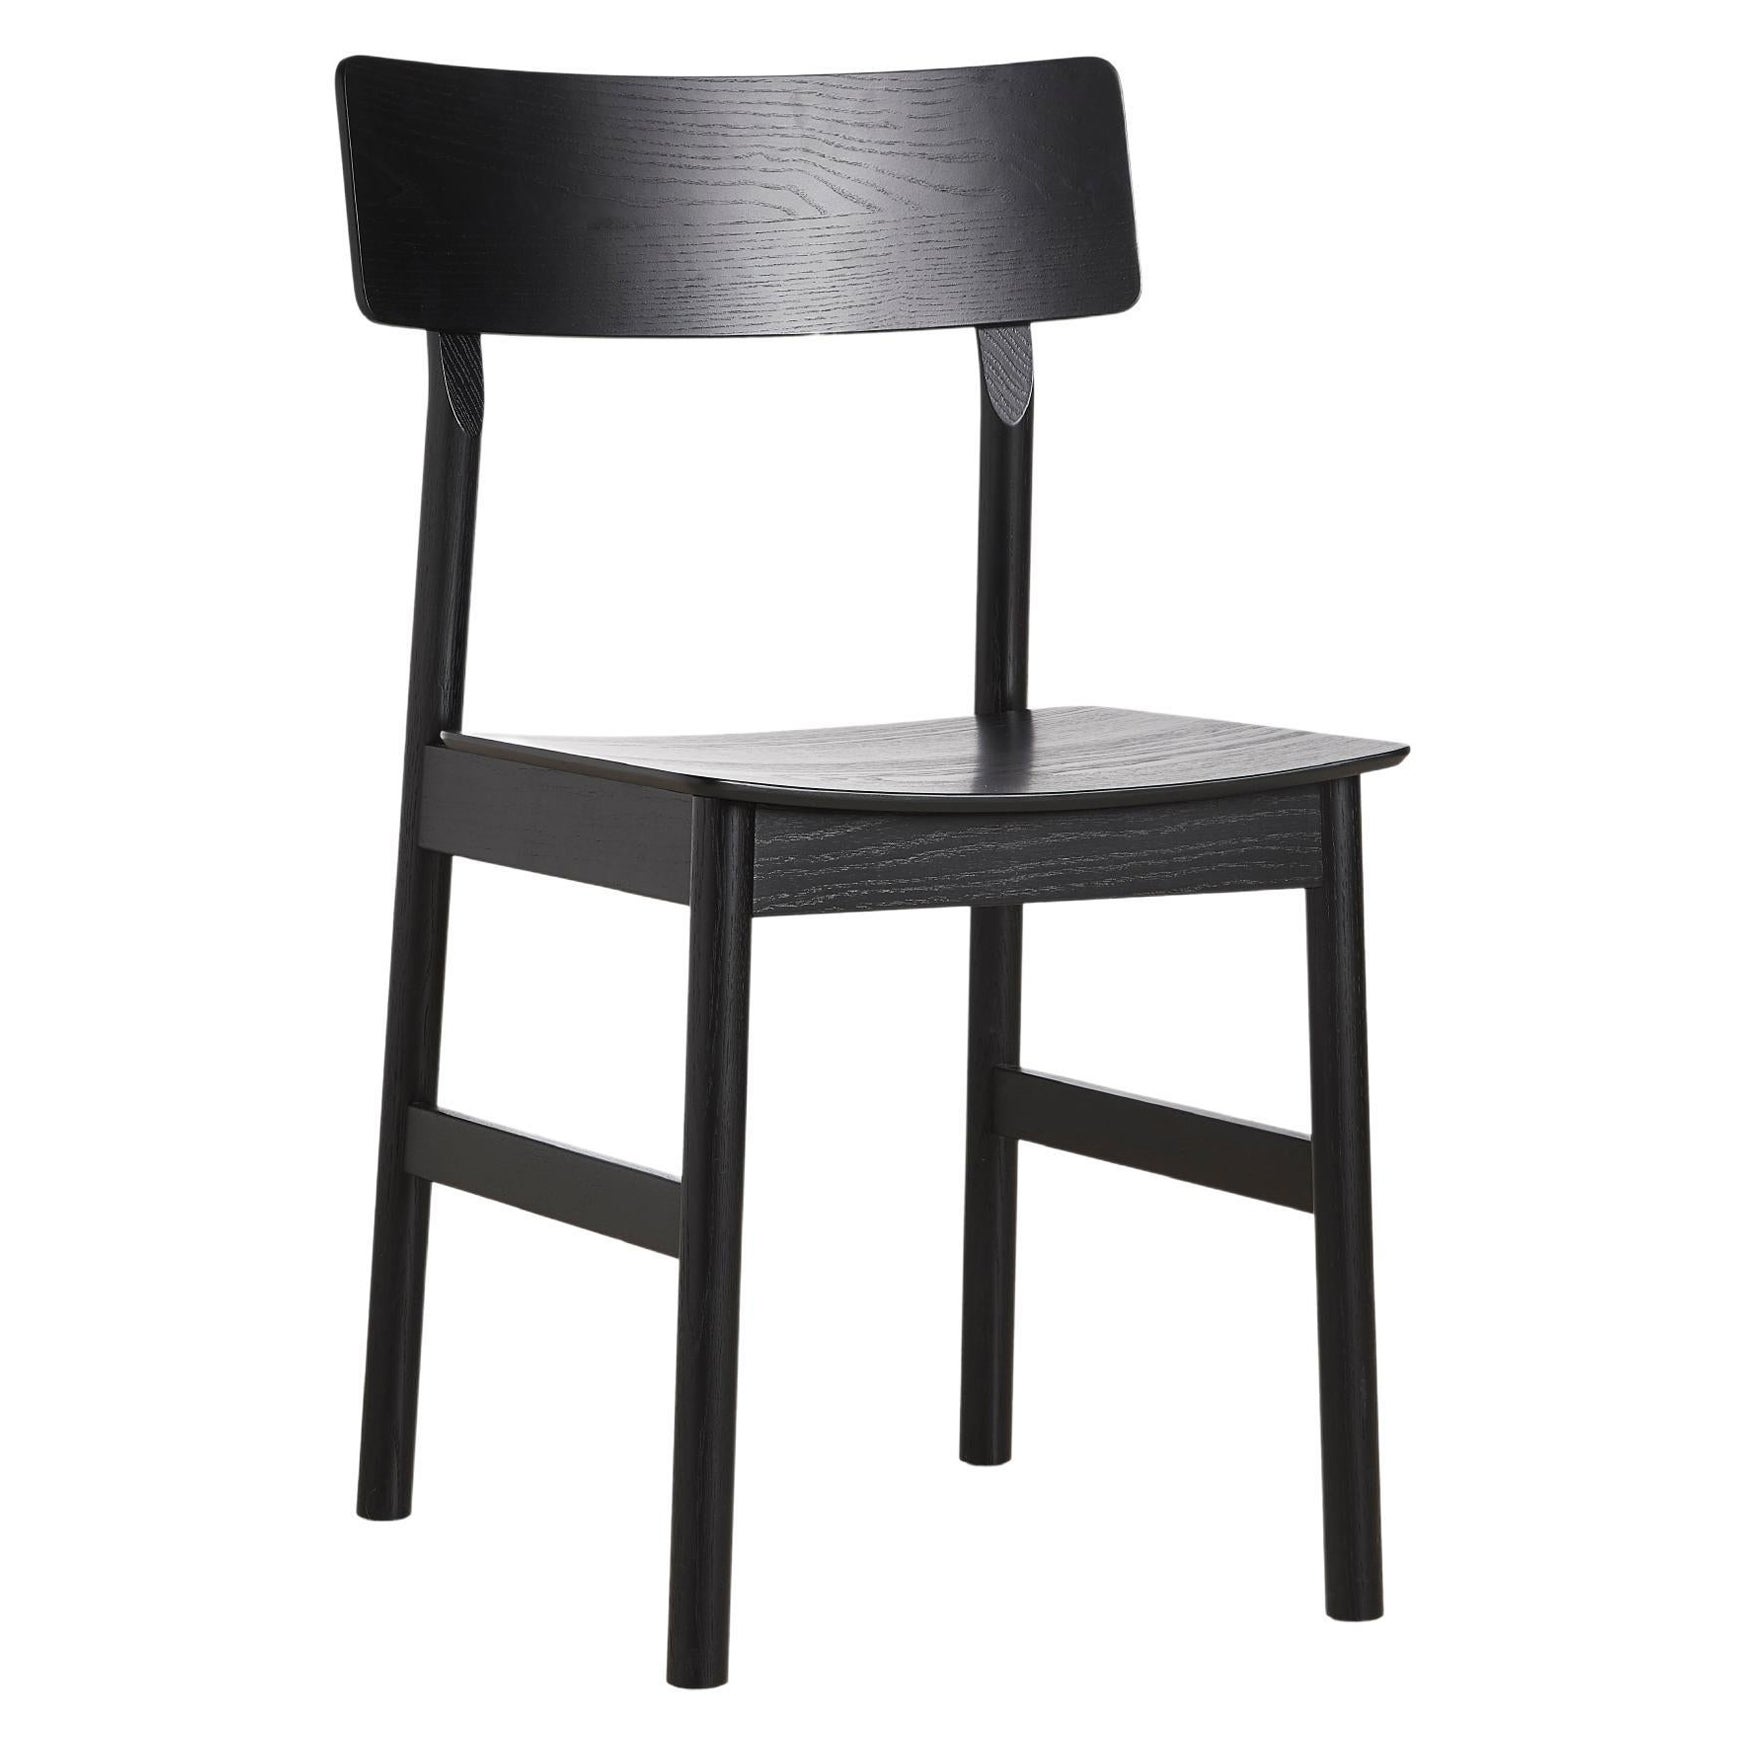 Pause Black Ash Dining Chair 2.0 by Kasper Nyman